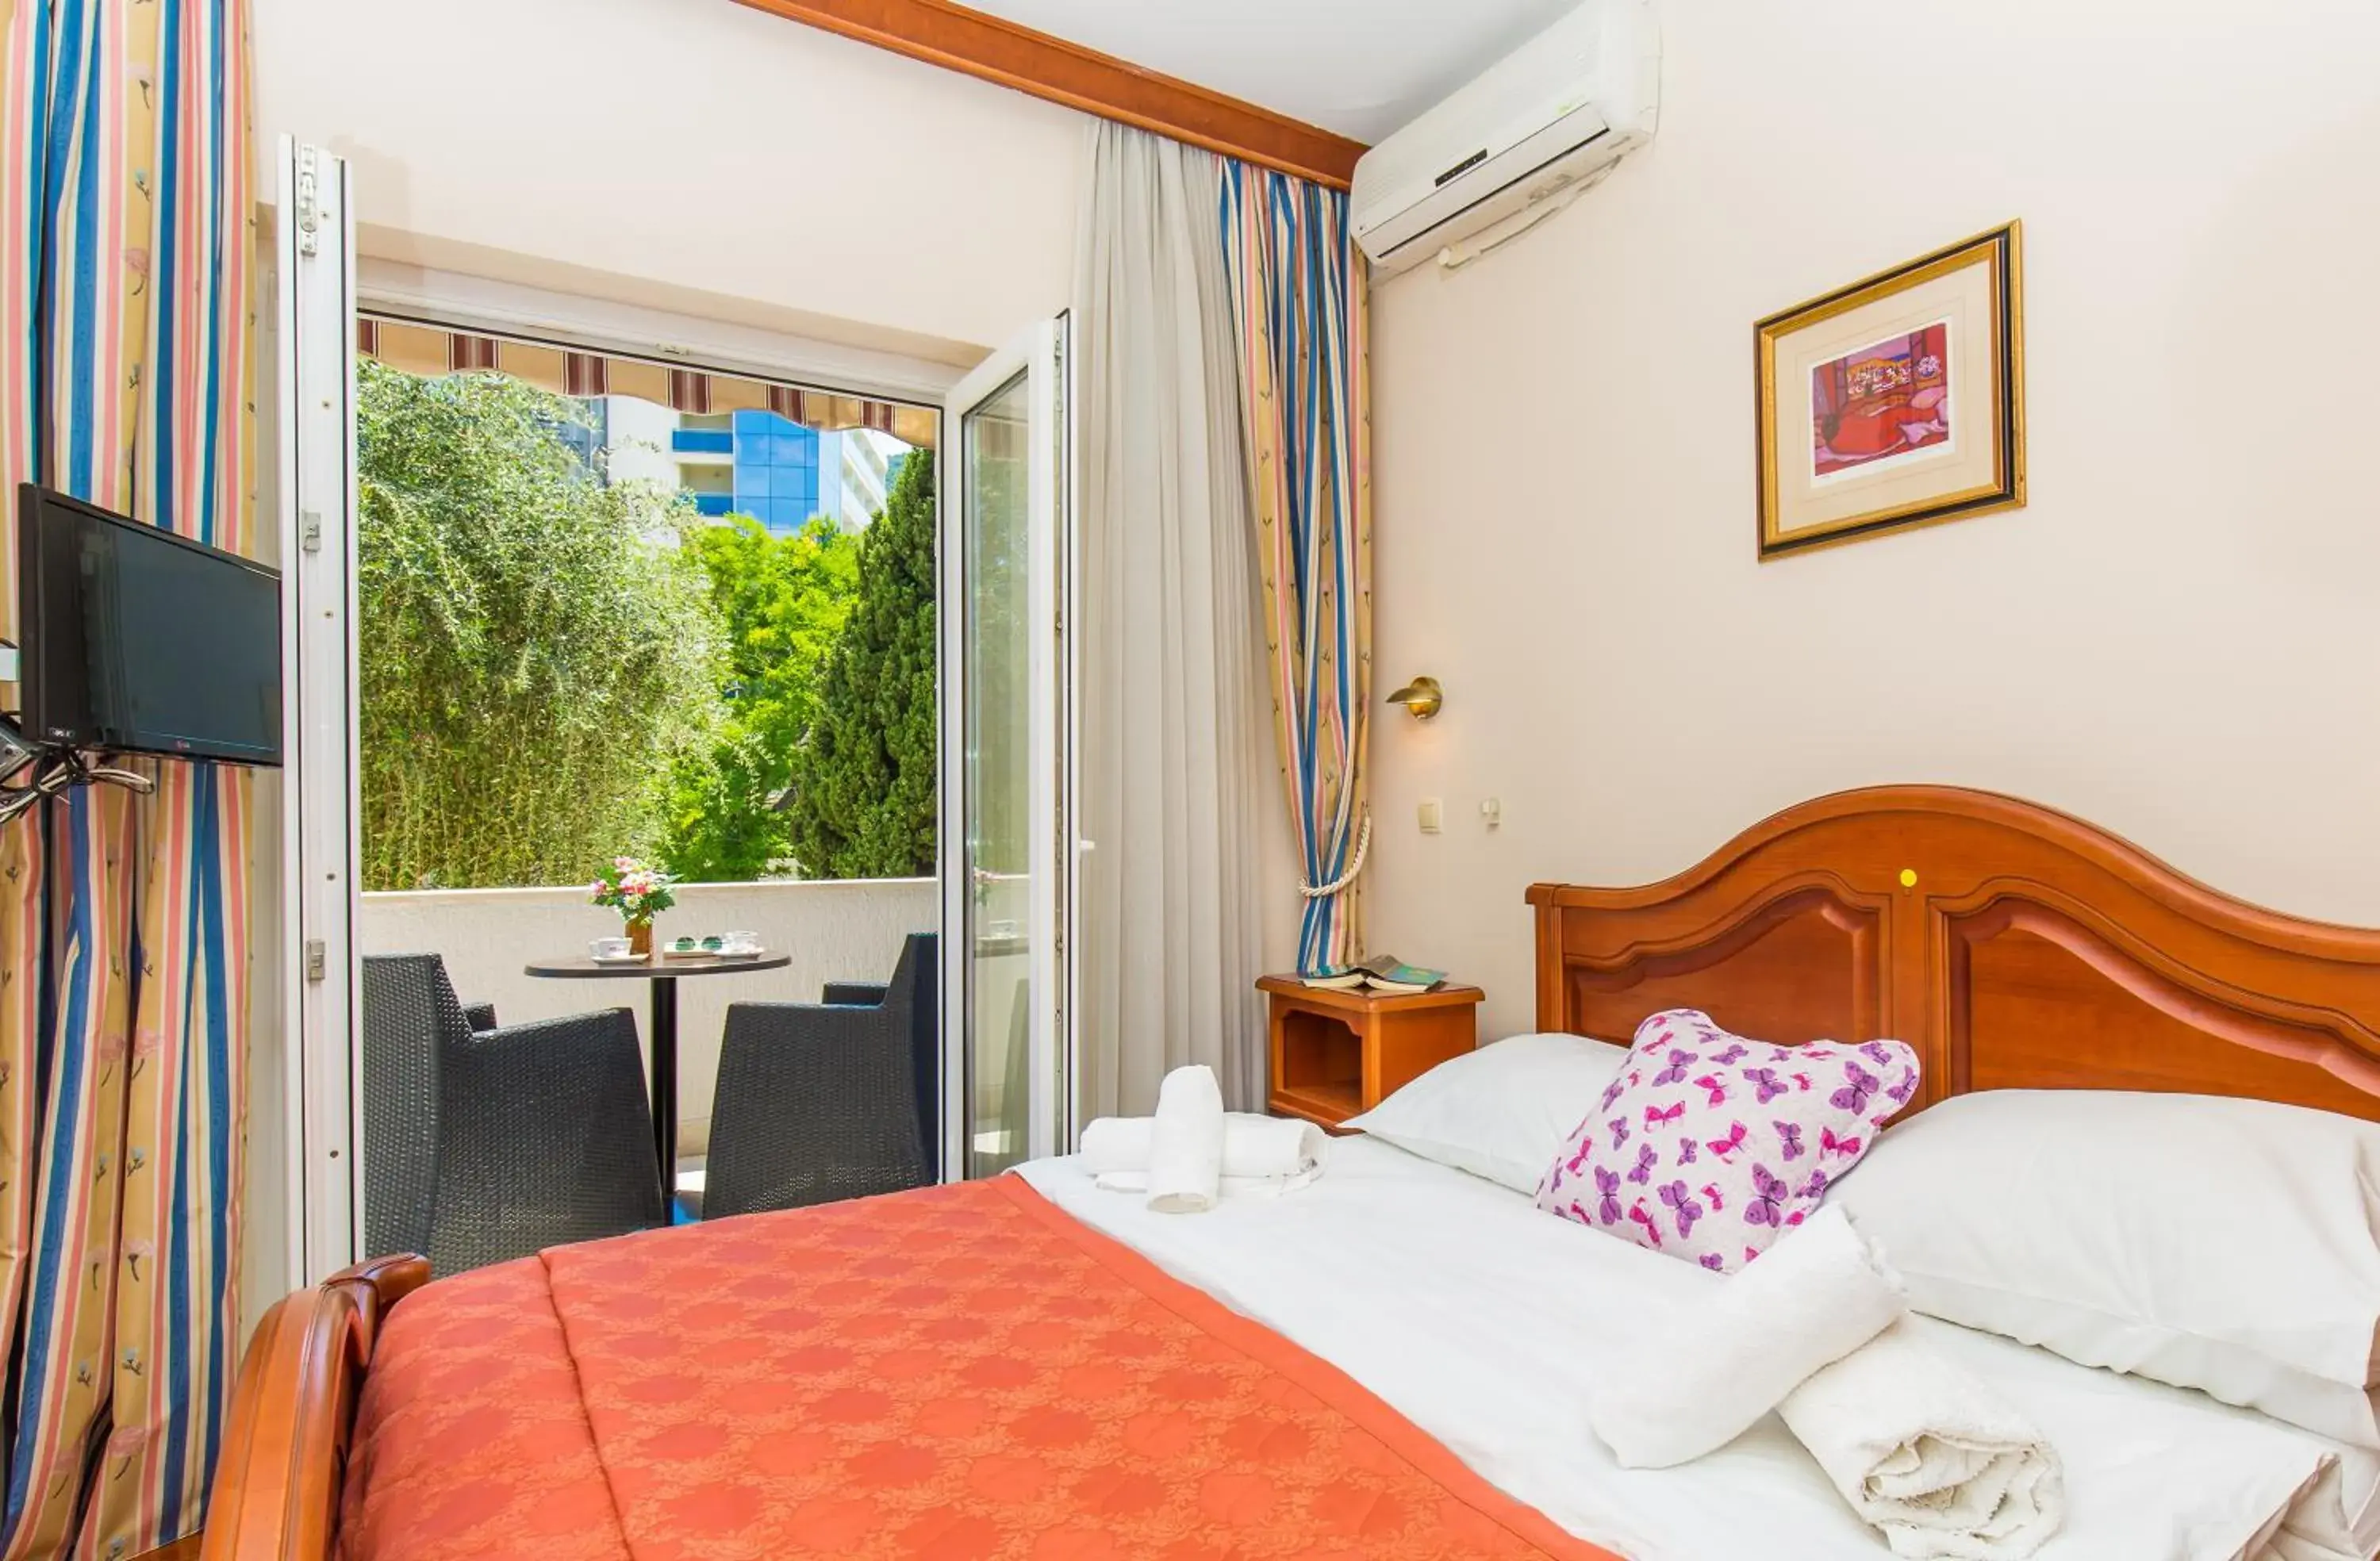 Bedroom, Room Photo in Hotel Dubrovnik